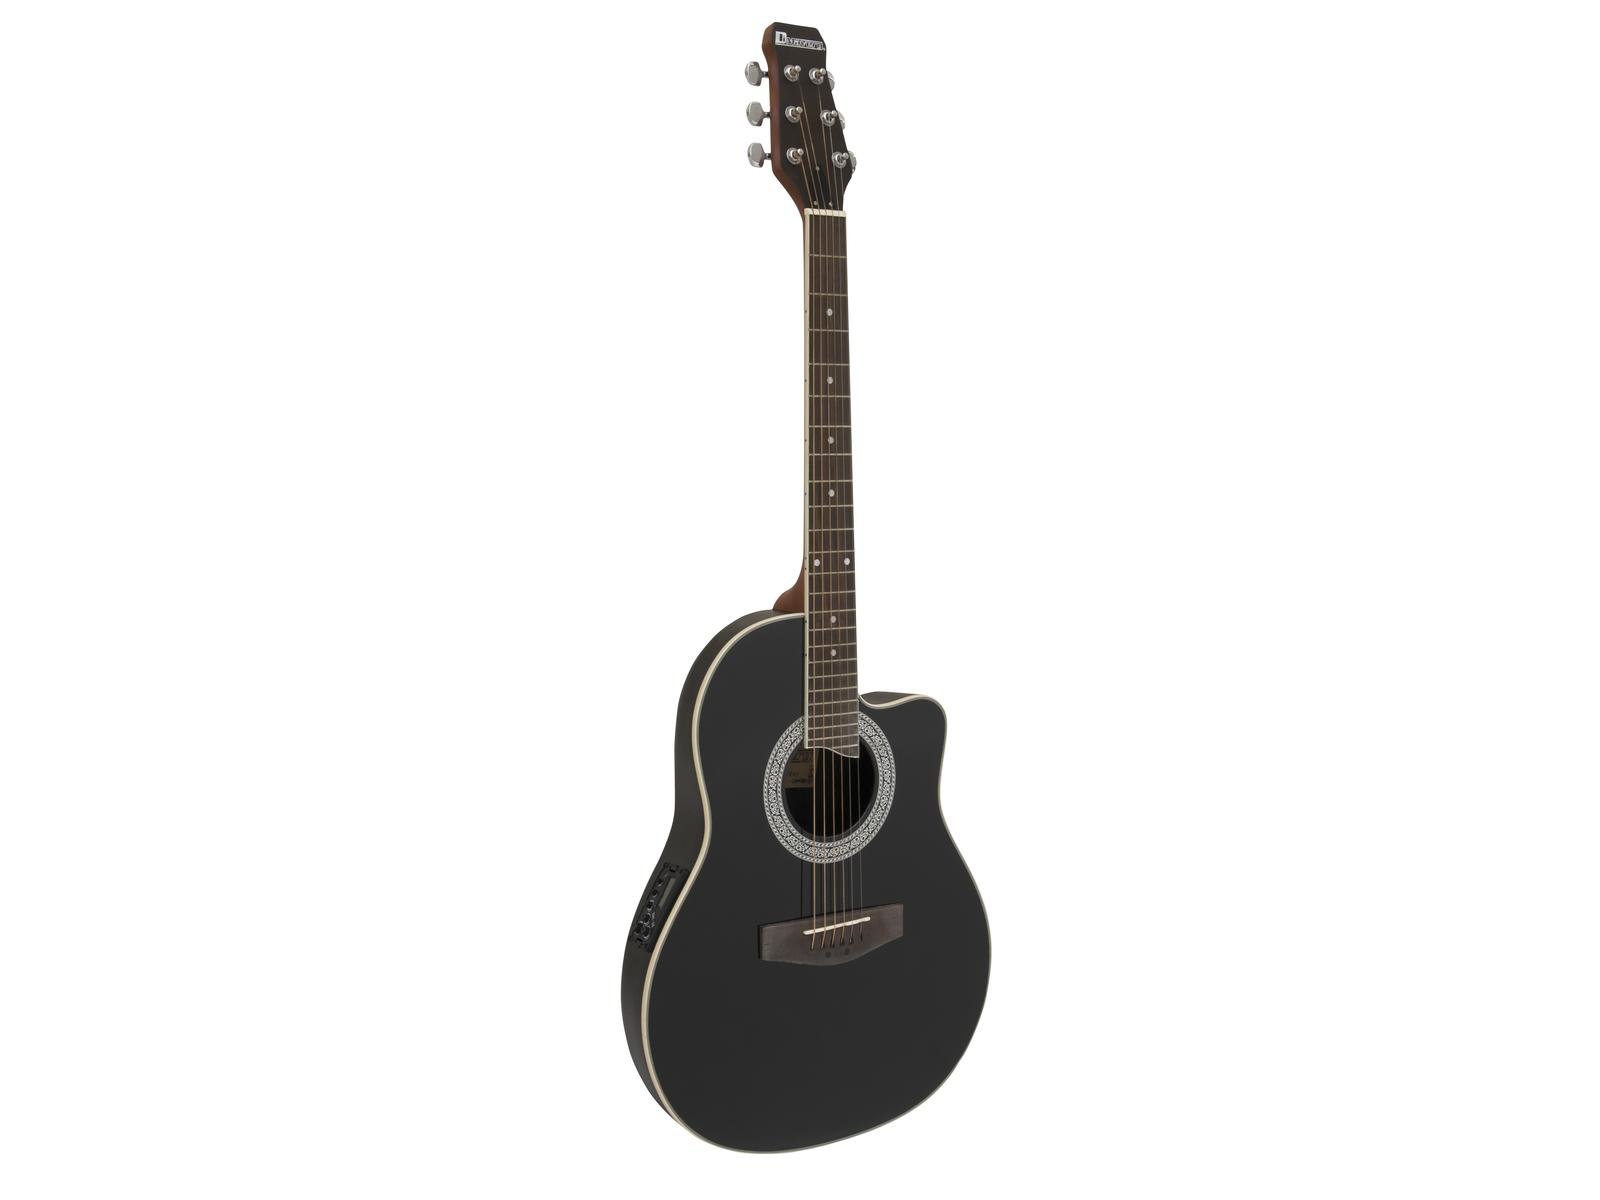 Dimavery RB-300 elektroakustická kytara typ roundback s výkrojem, černá